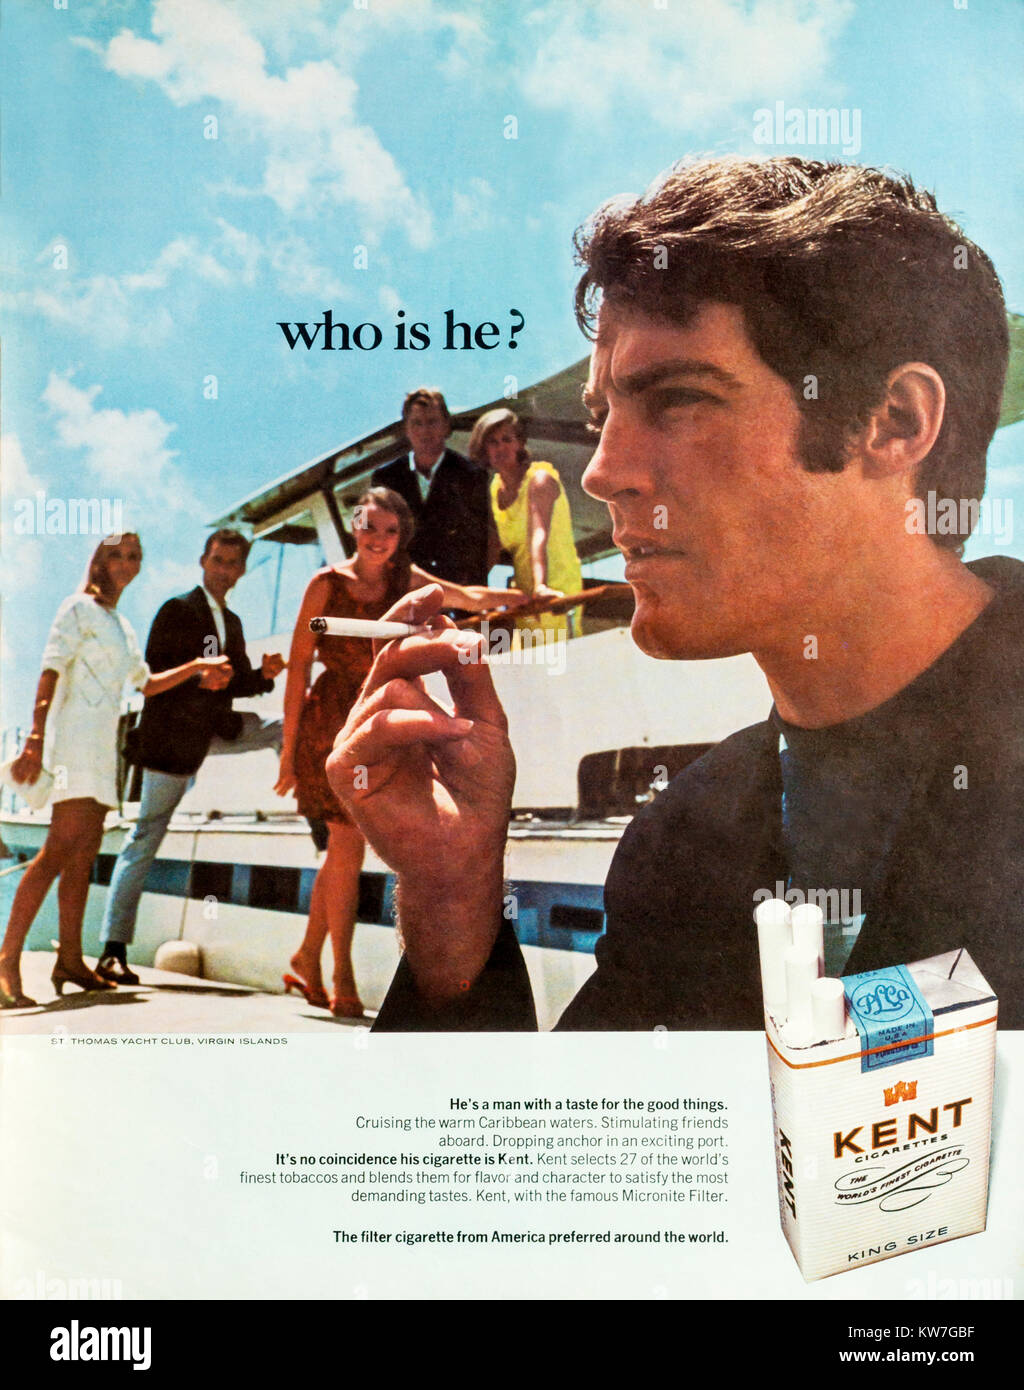 1960s magazine advertisement advertising Kent cigarettes. Stock Photo